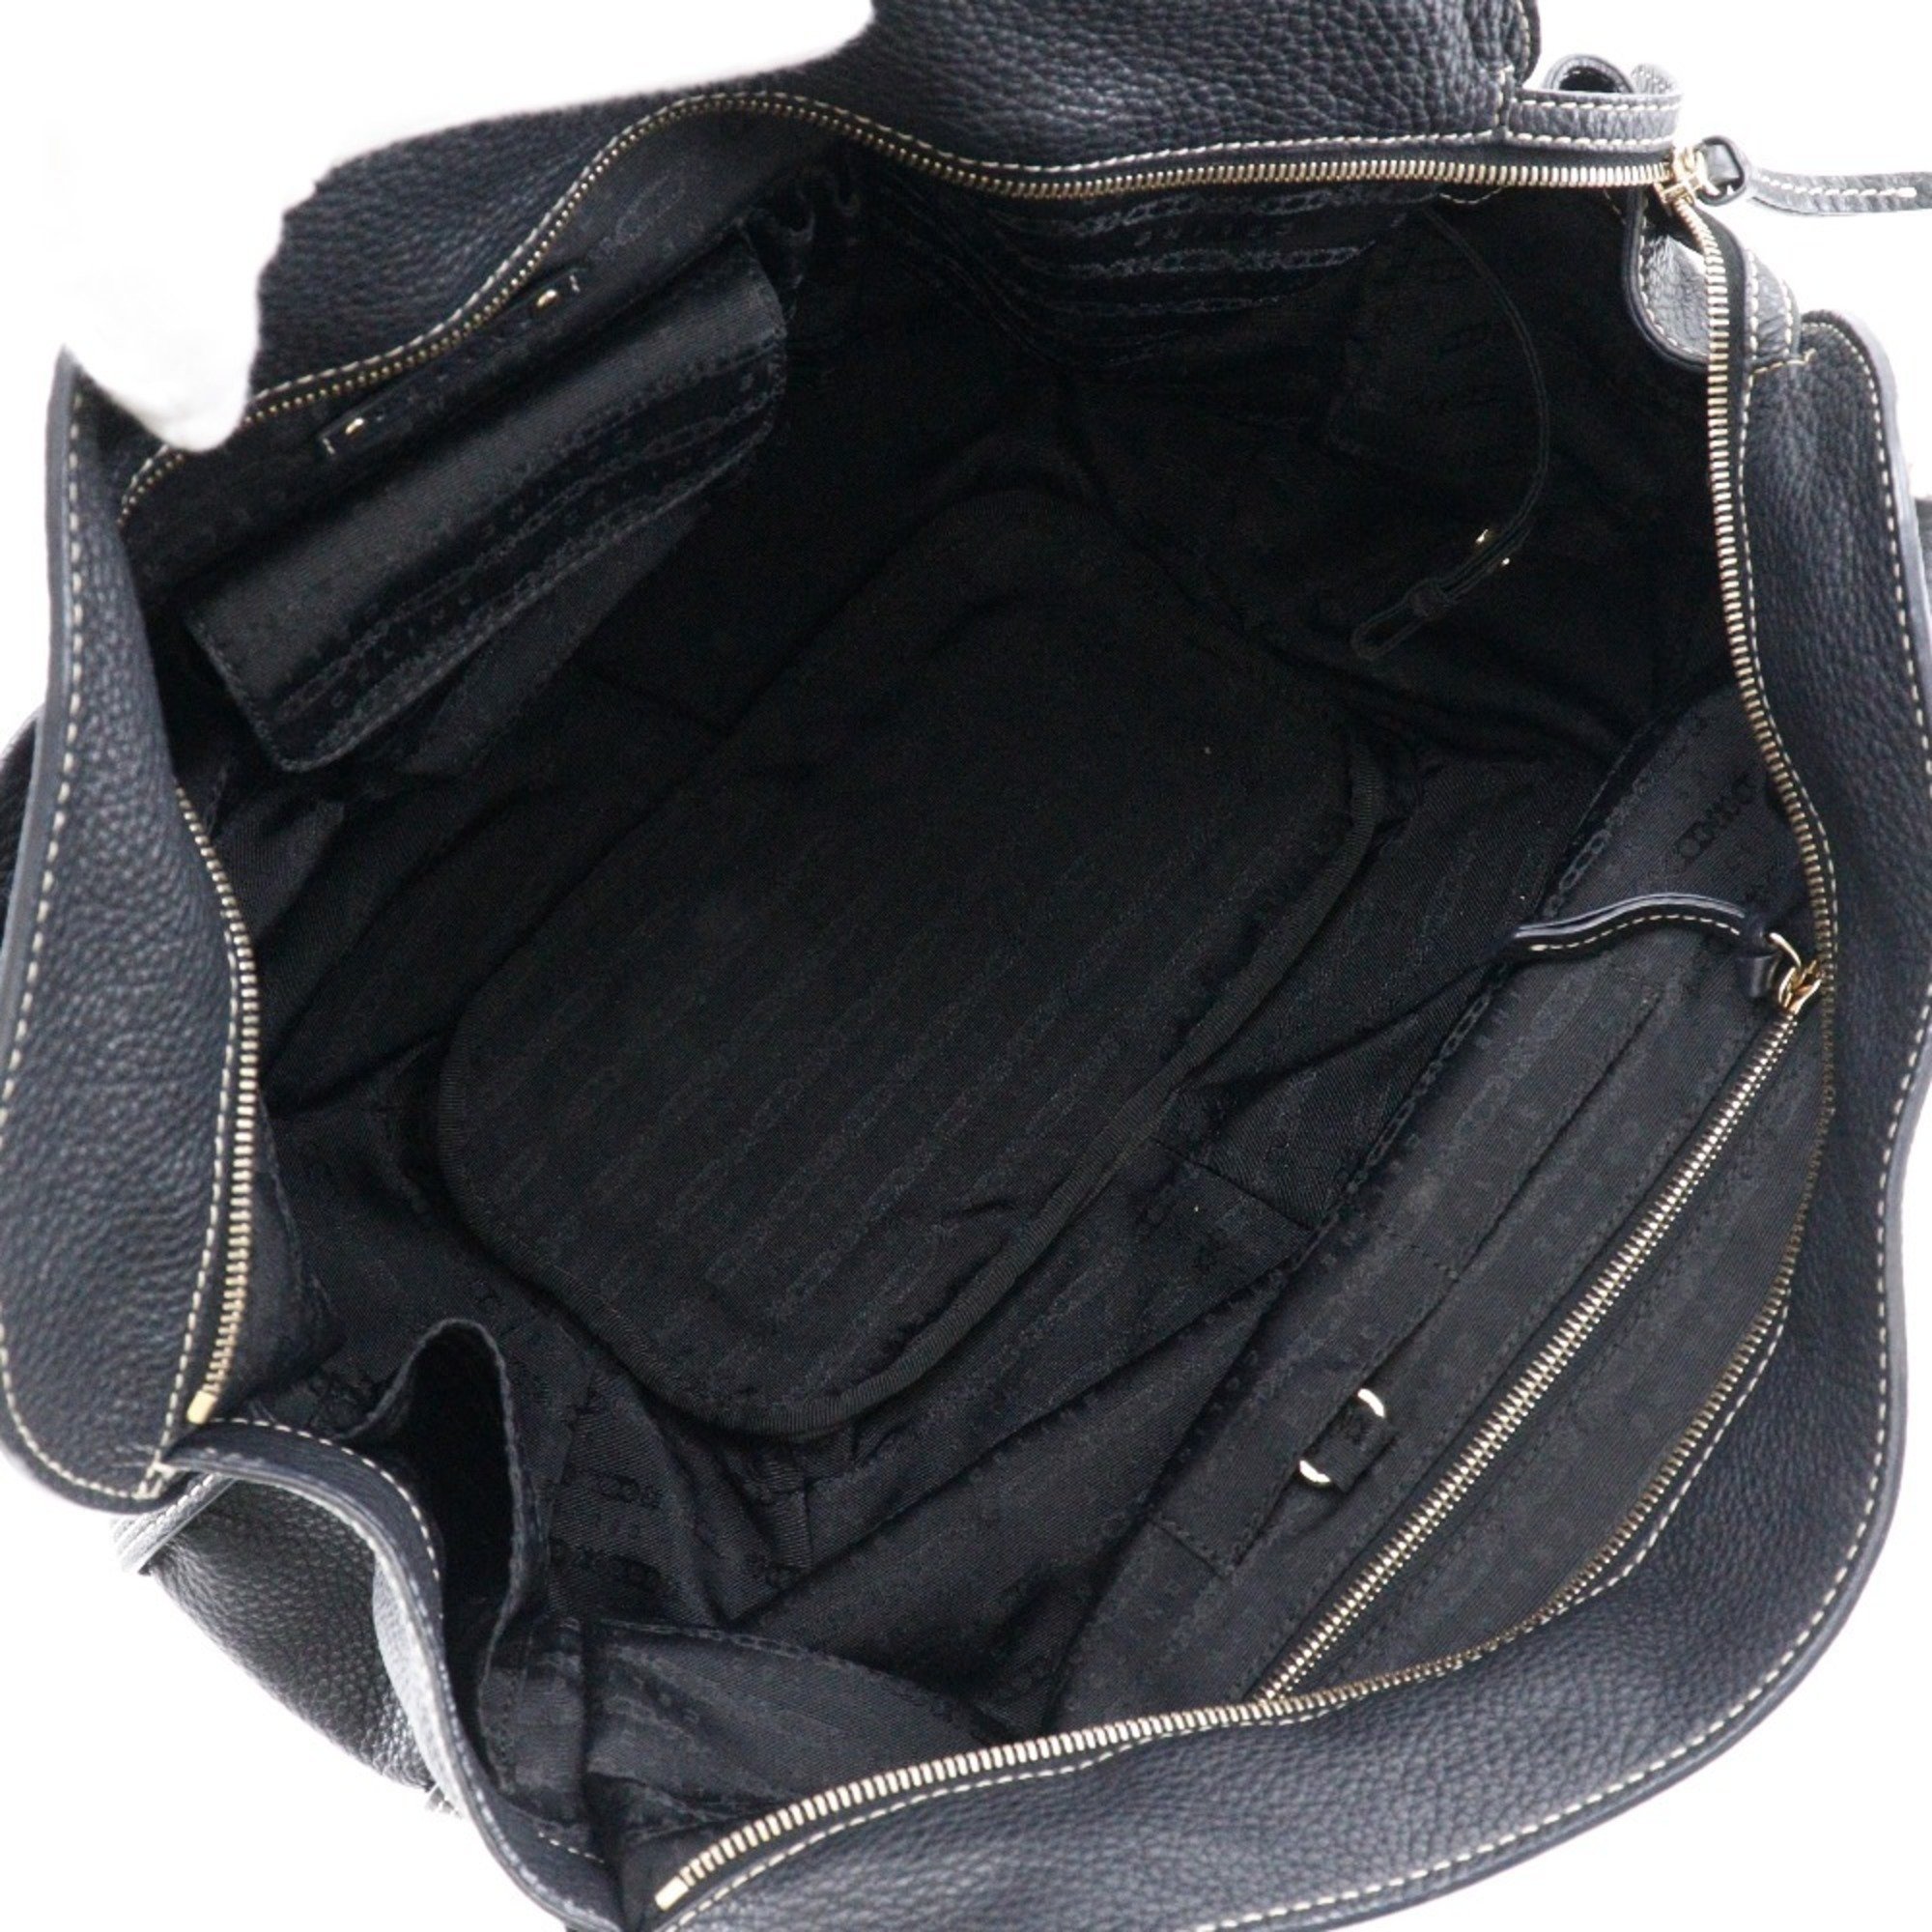 CELINE Tote Bag Leather Women's T142024969